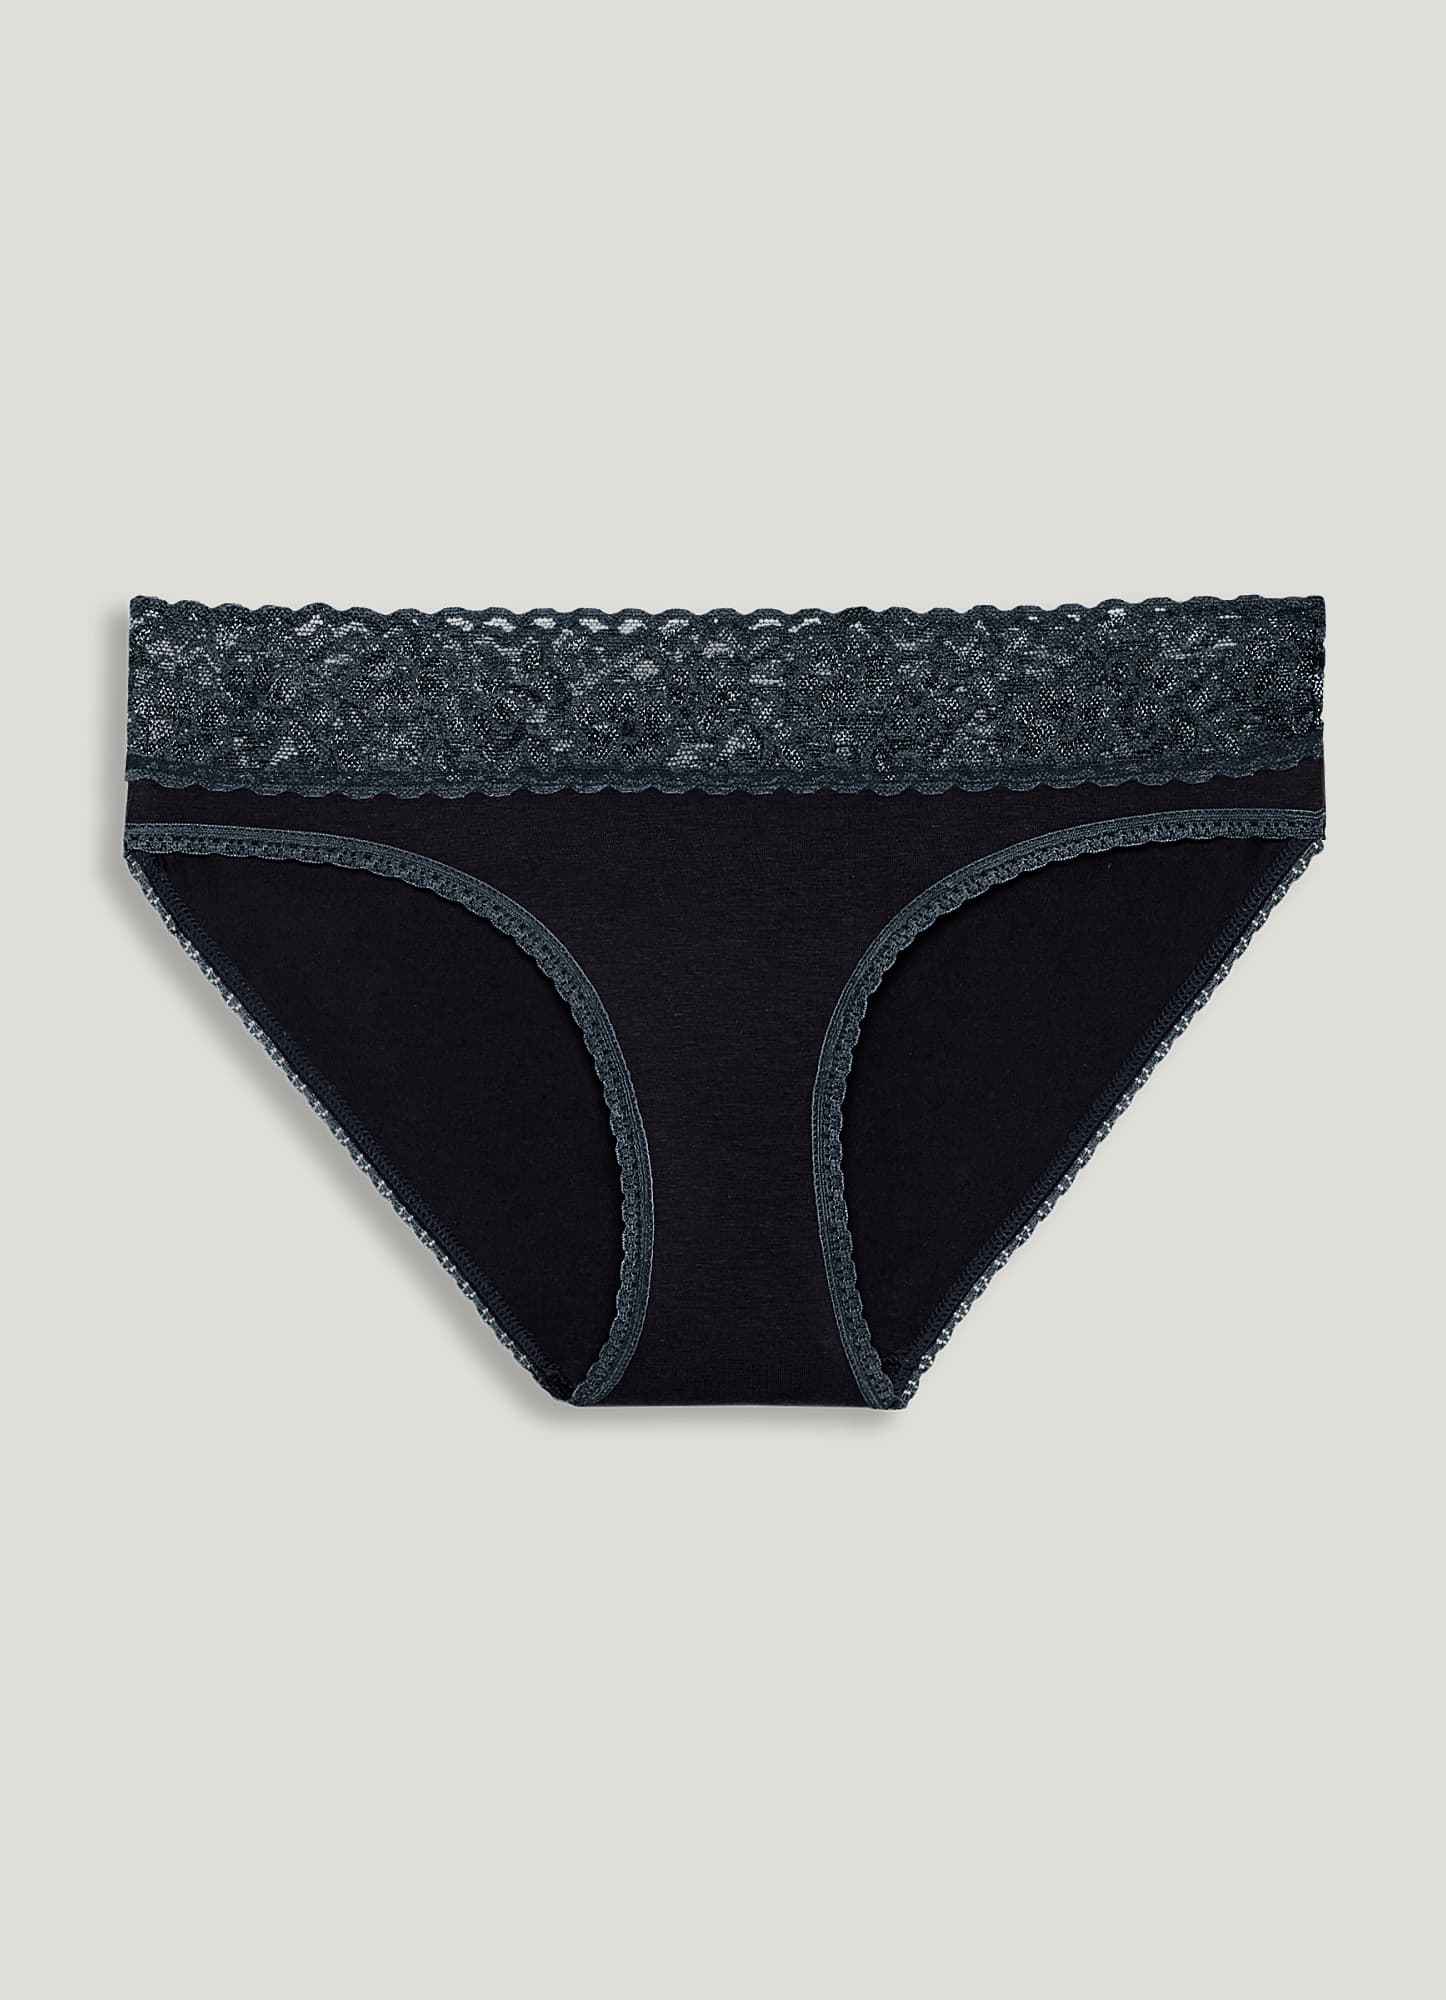 Women Stretch G String Panty Lace Trim 5 Colors Comfy Sexy Underwear  Underwear Women Cotton (Black-0, L)